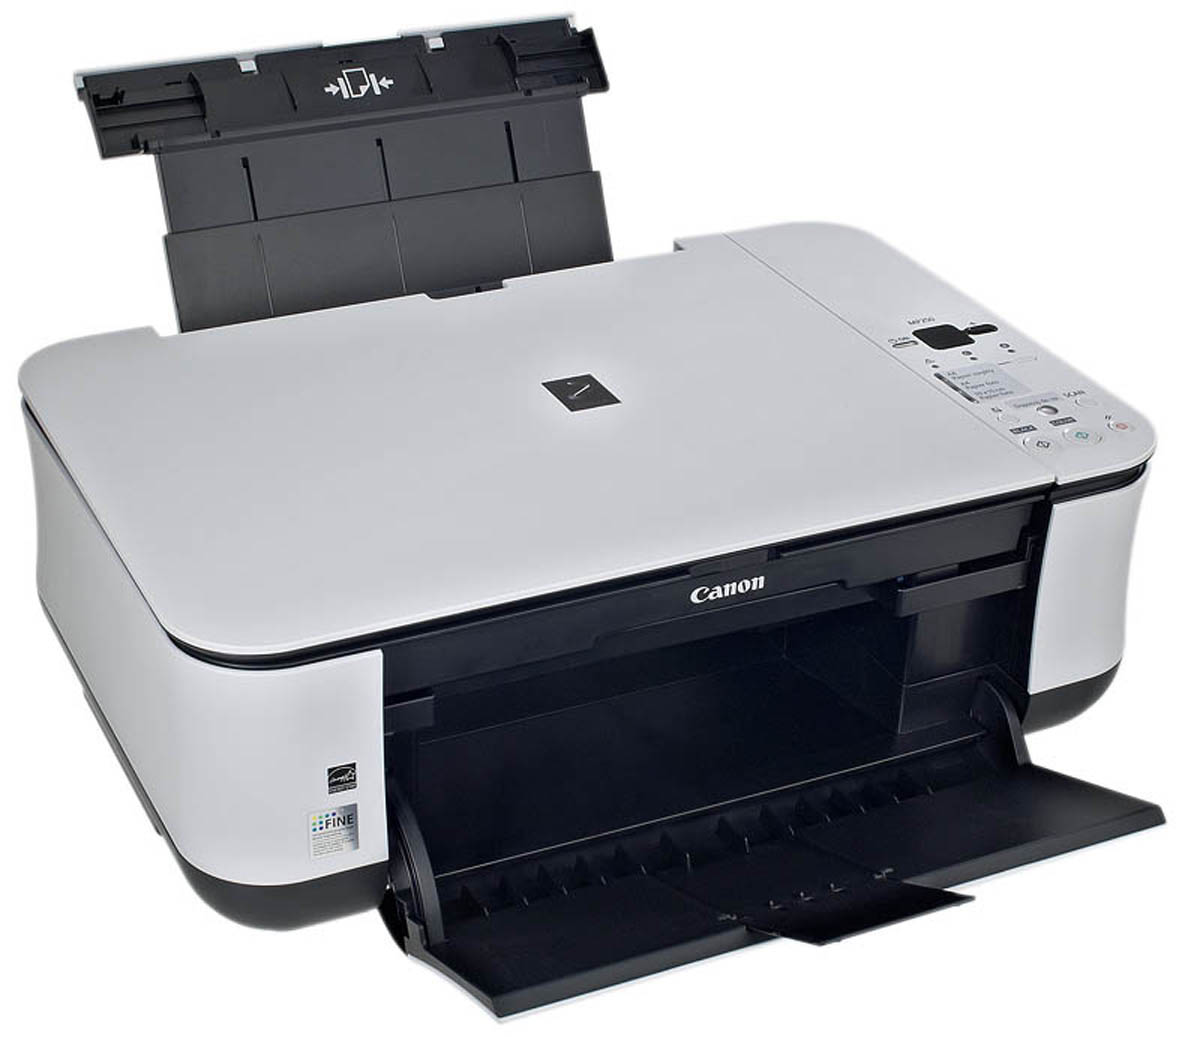 canon mp250 printer scanner driver download